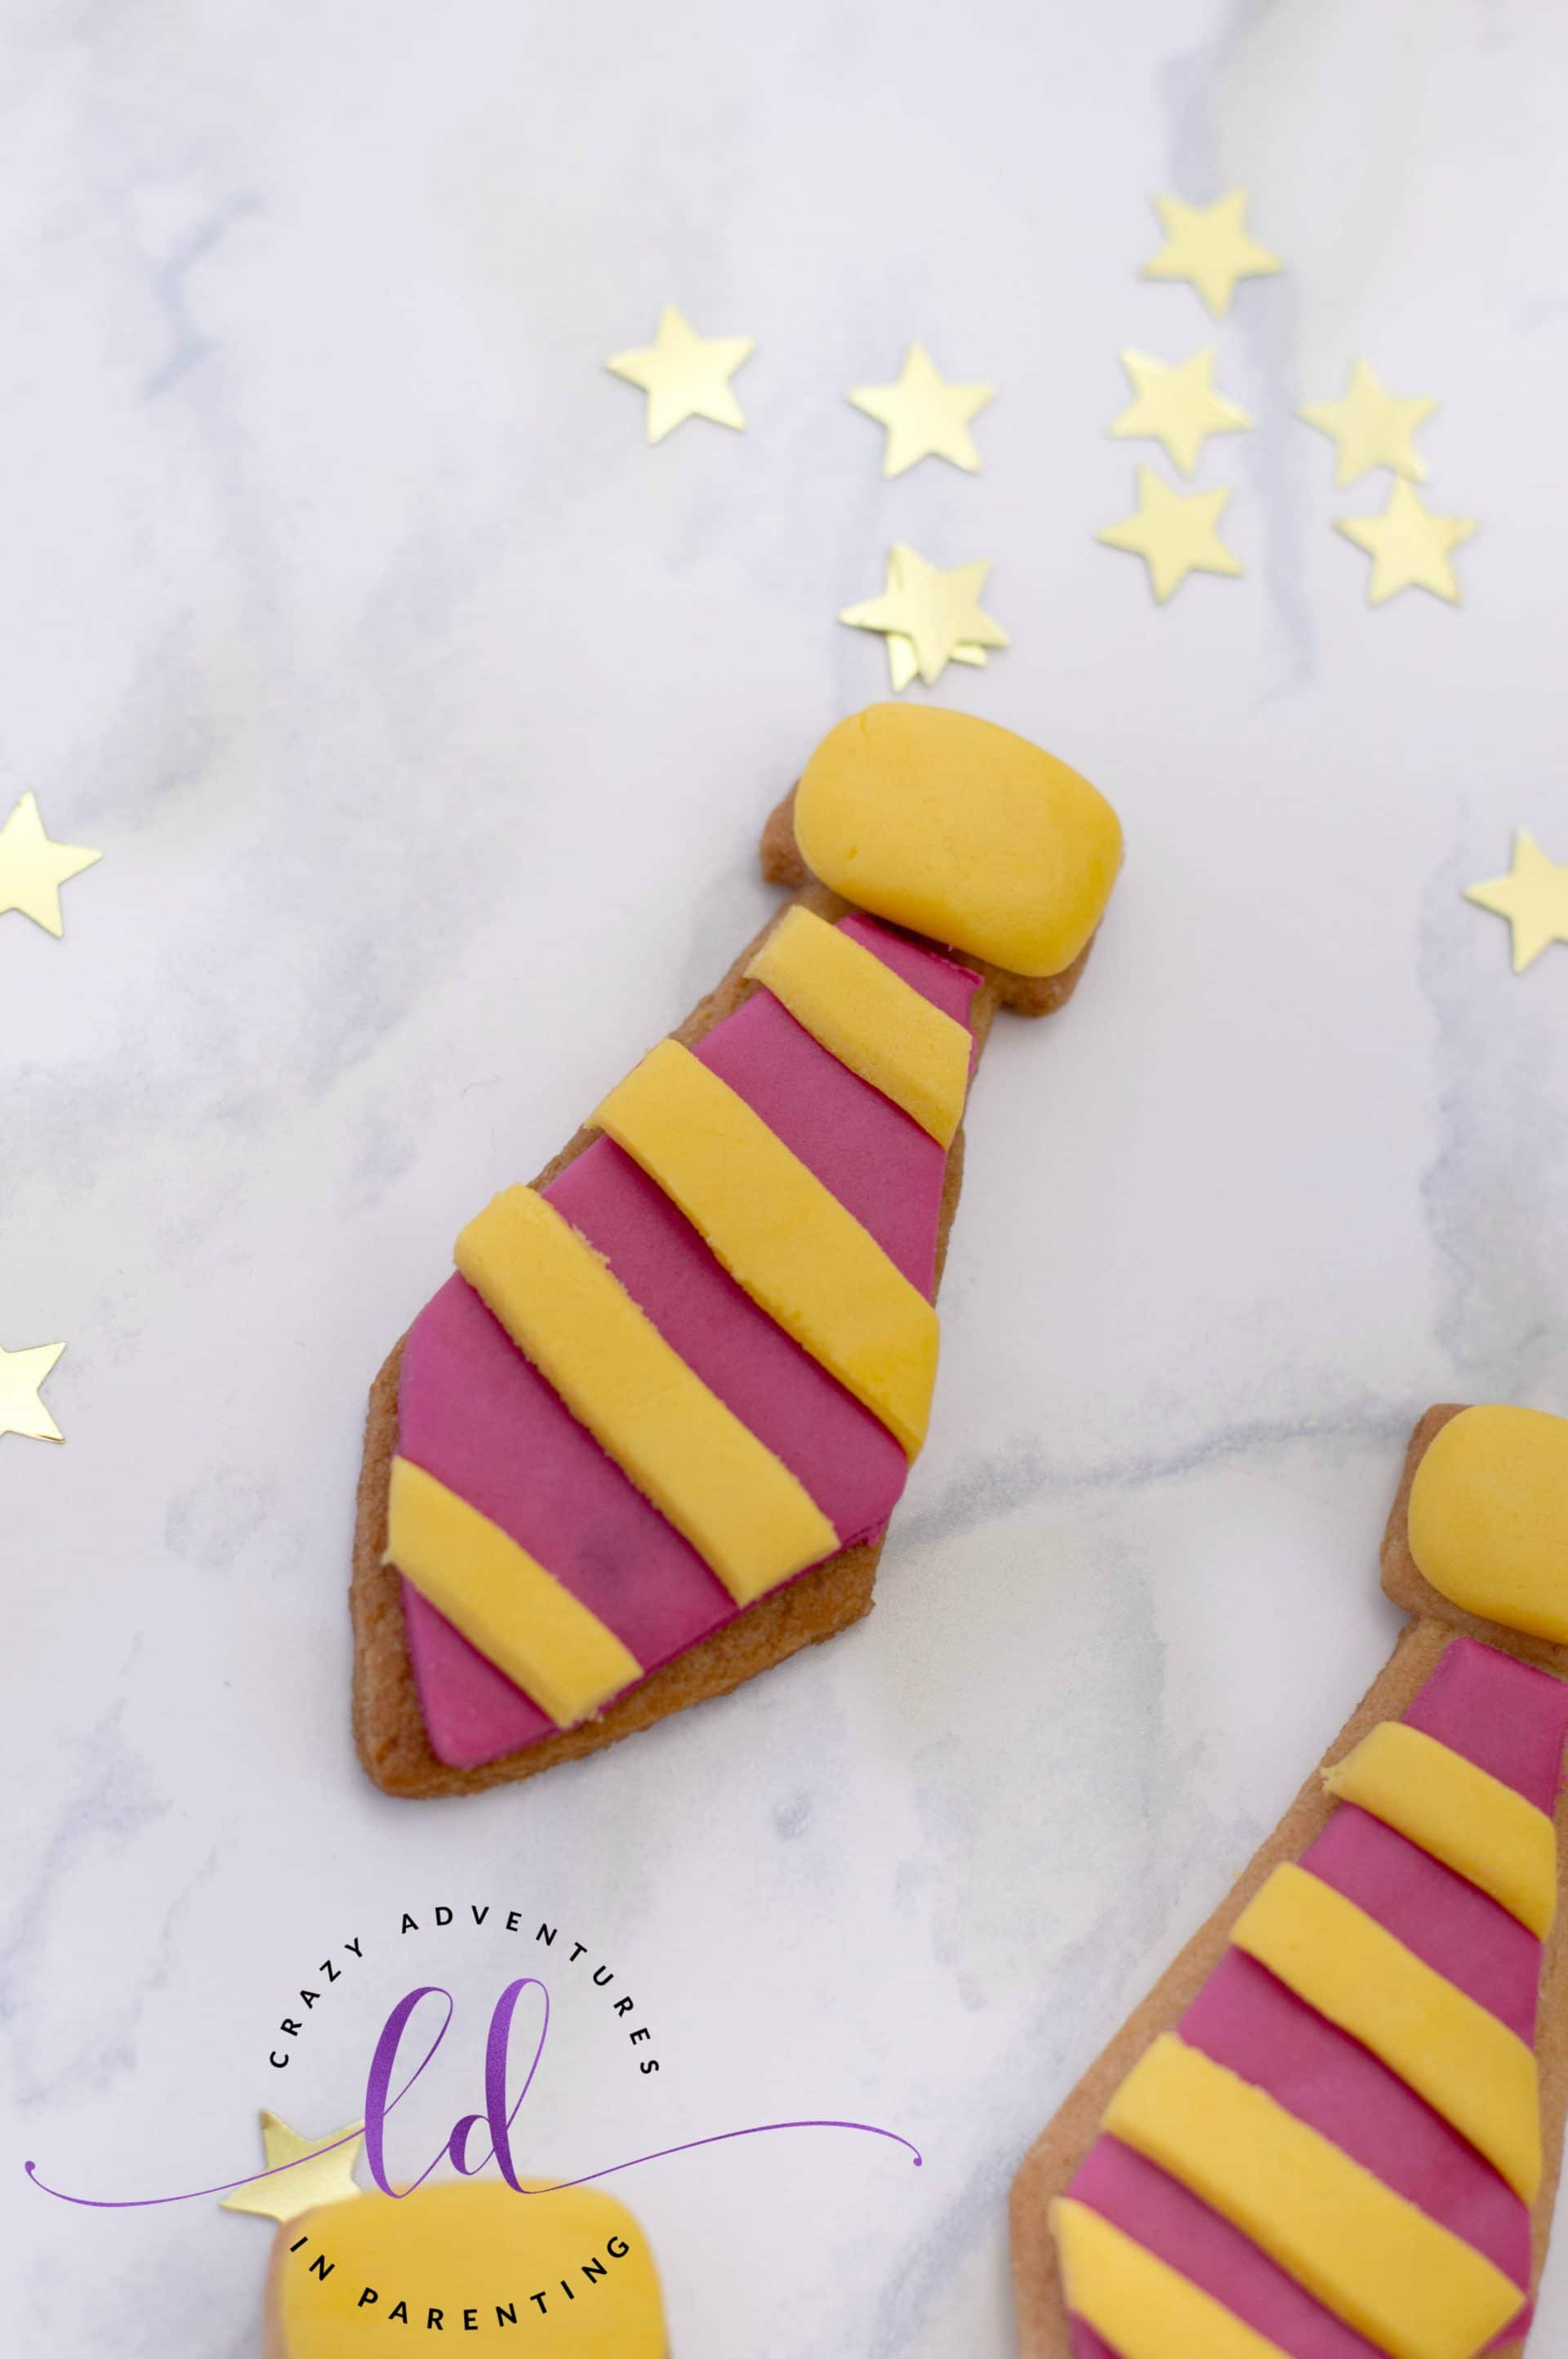 Harry Potter Cookies with Fondant Gryffindor Ties